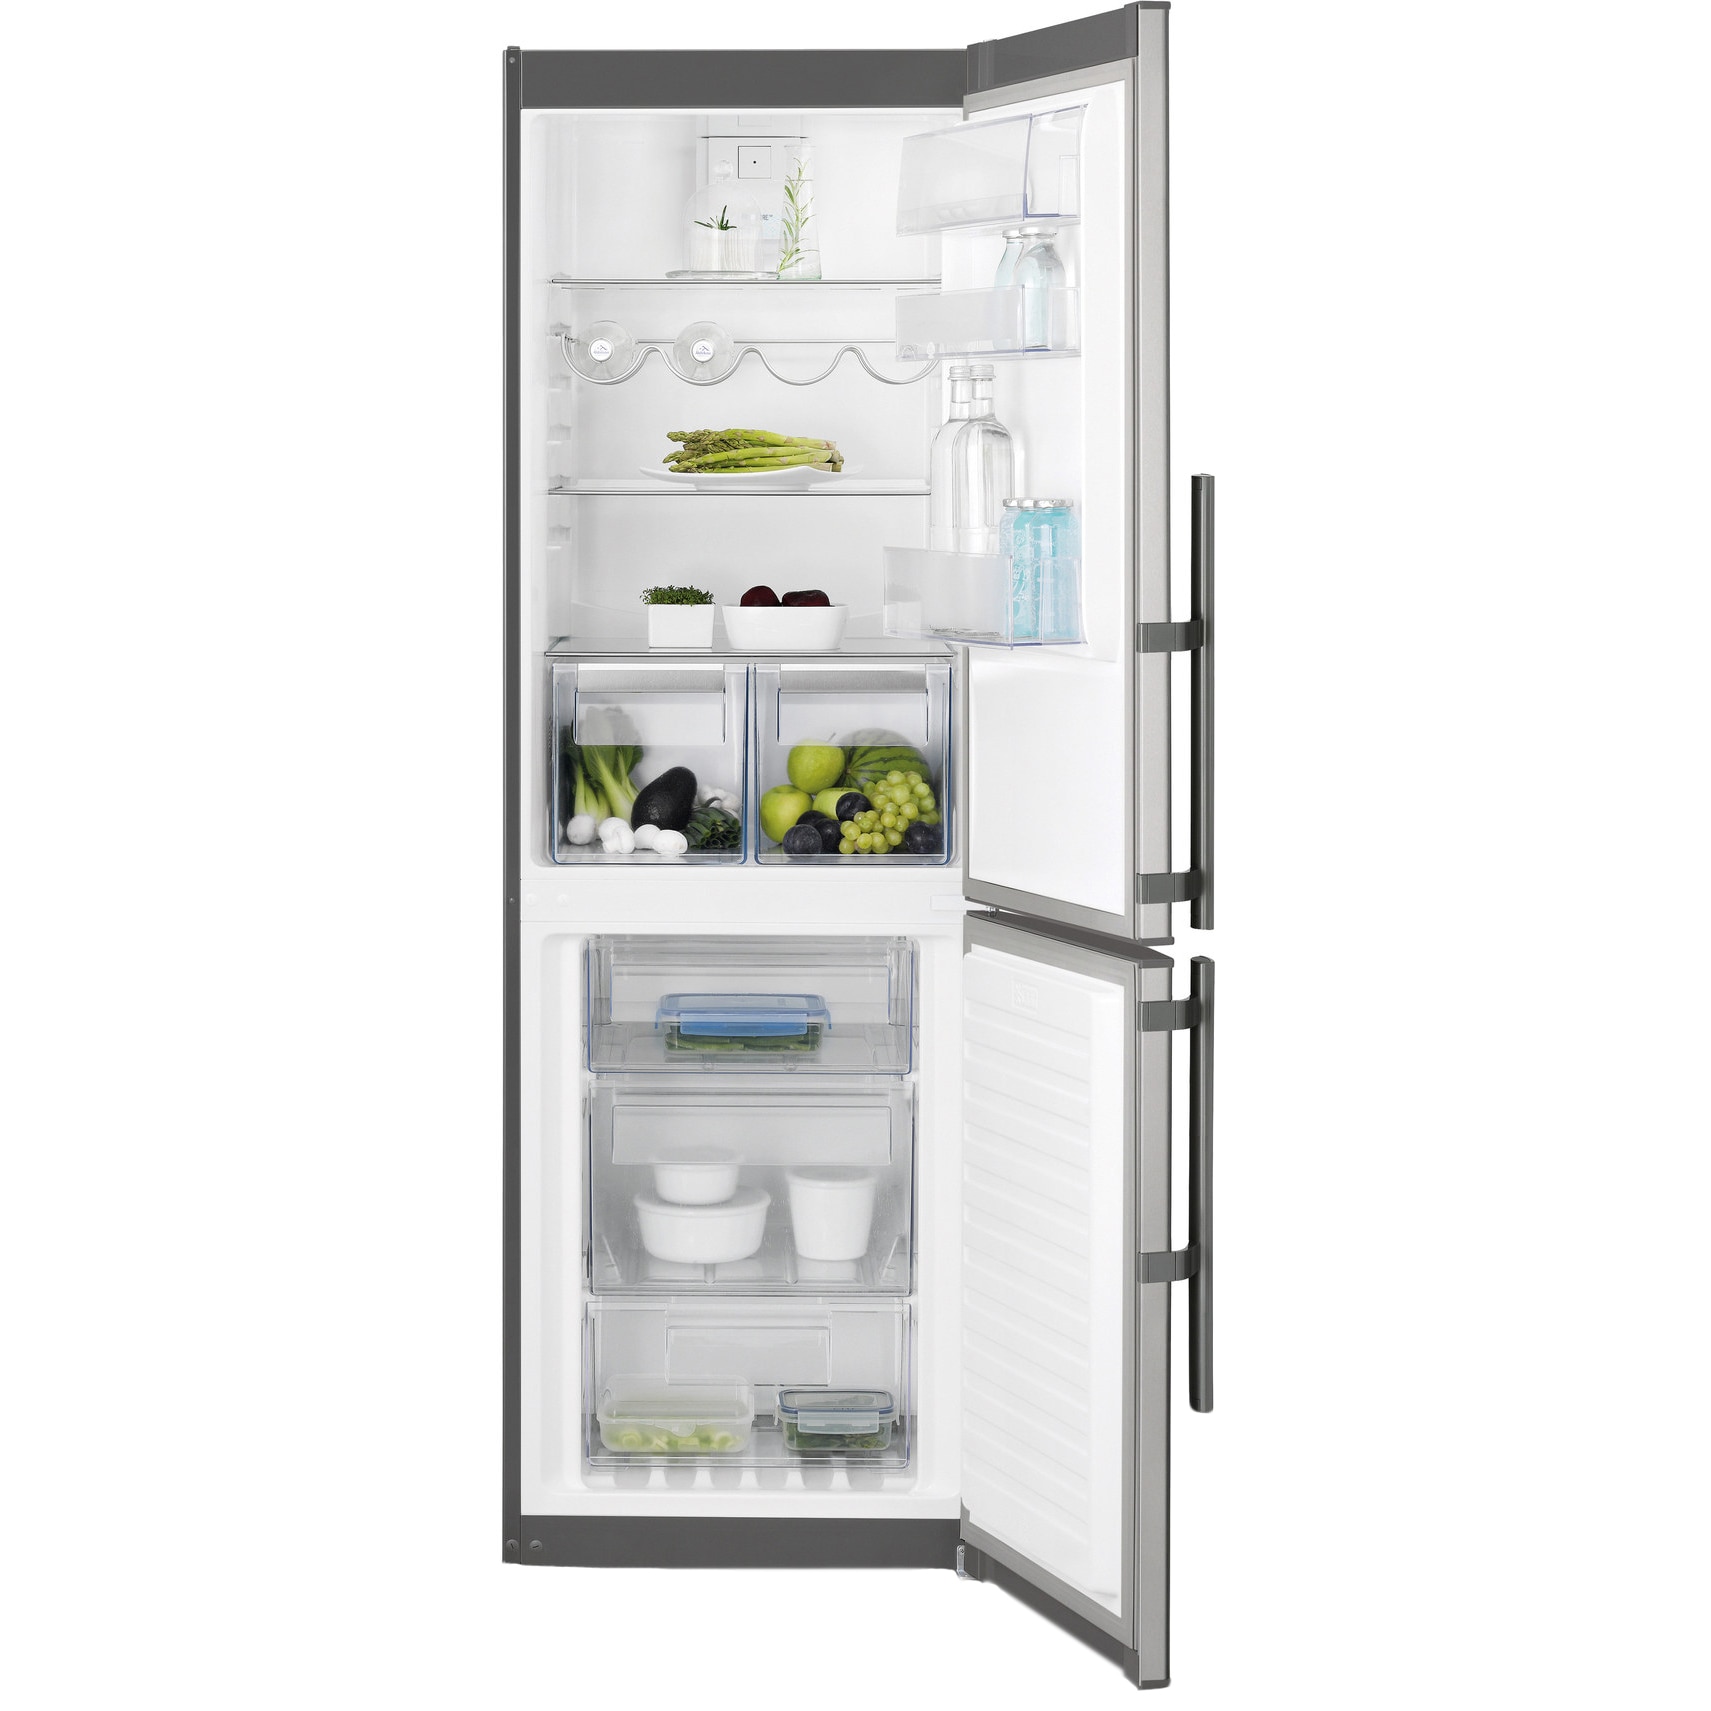 Хладилник Electrolux EN3453MOX с обем от 318 л.